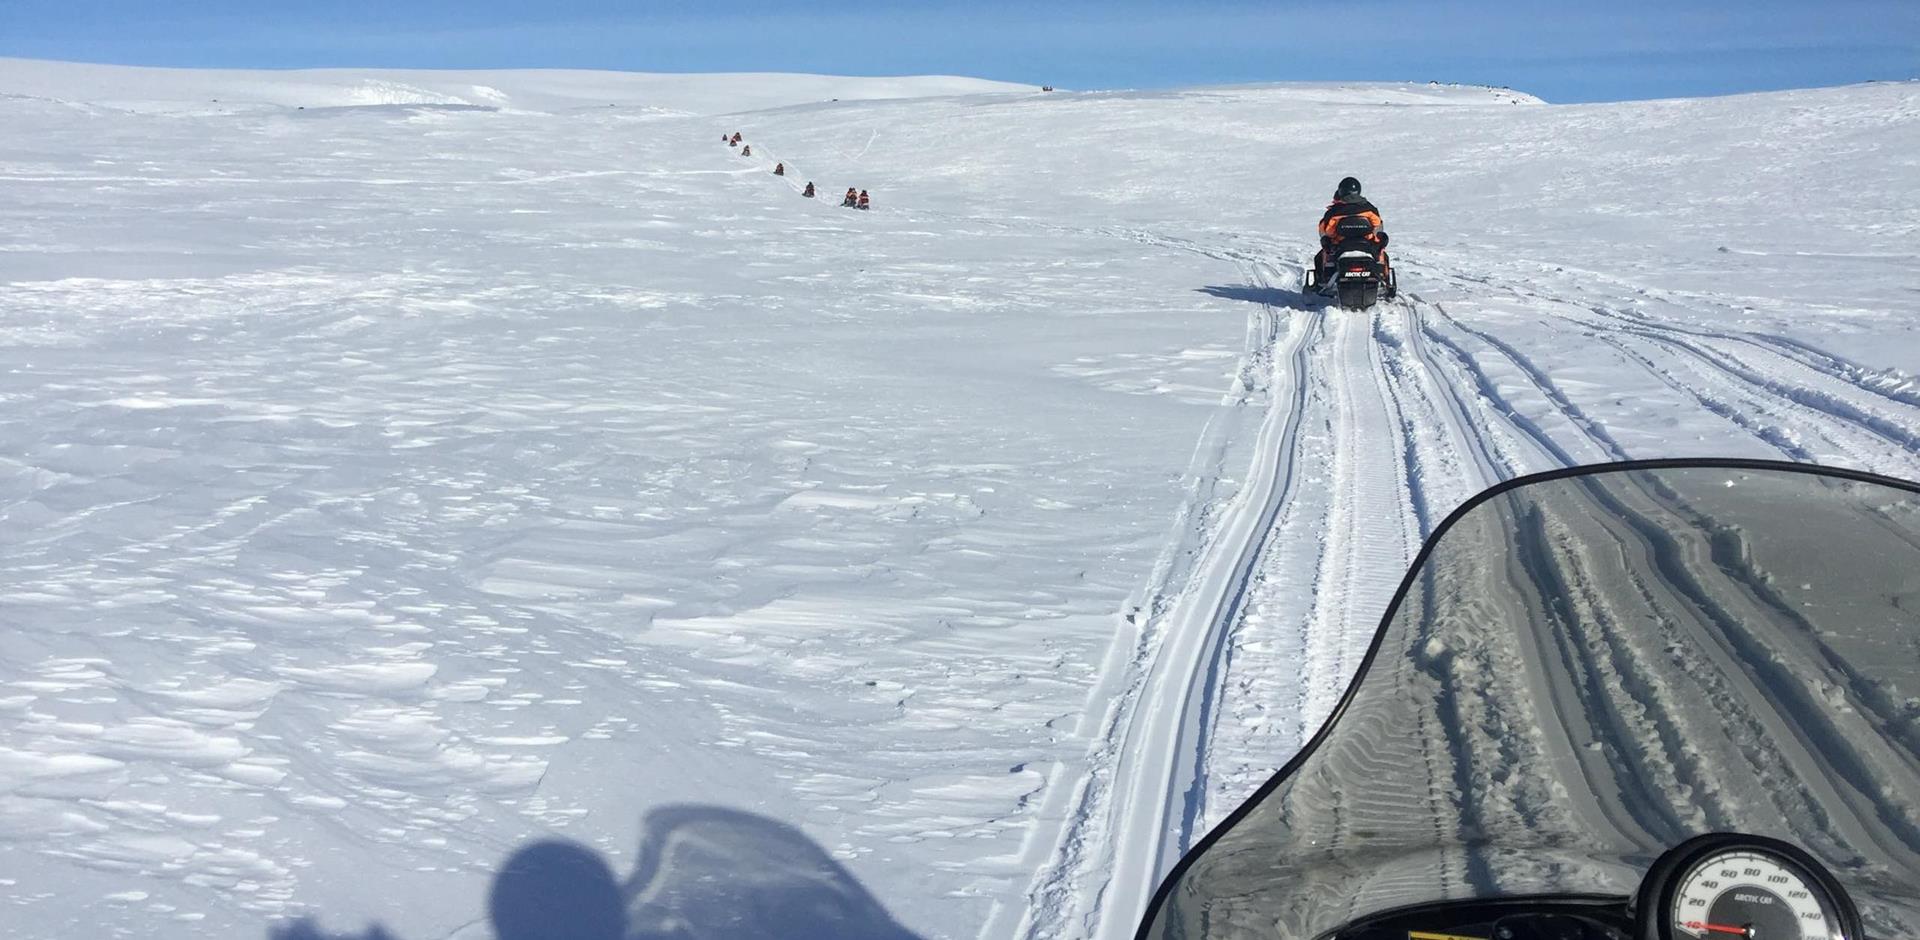 Explore Icelands glacier by snowmobile